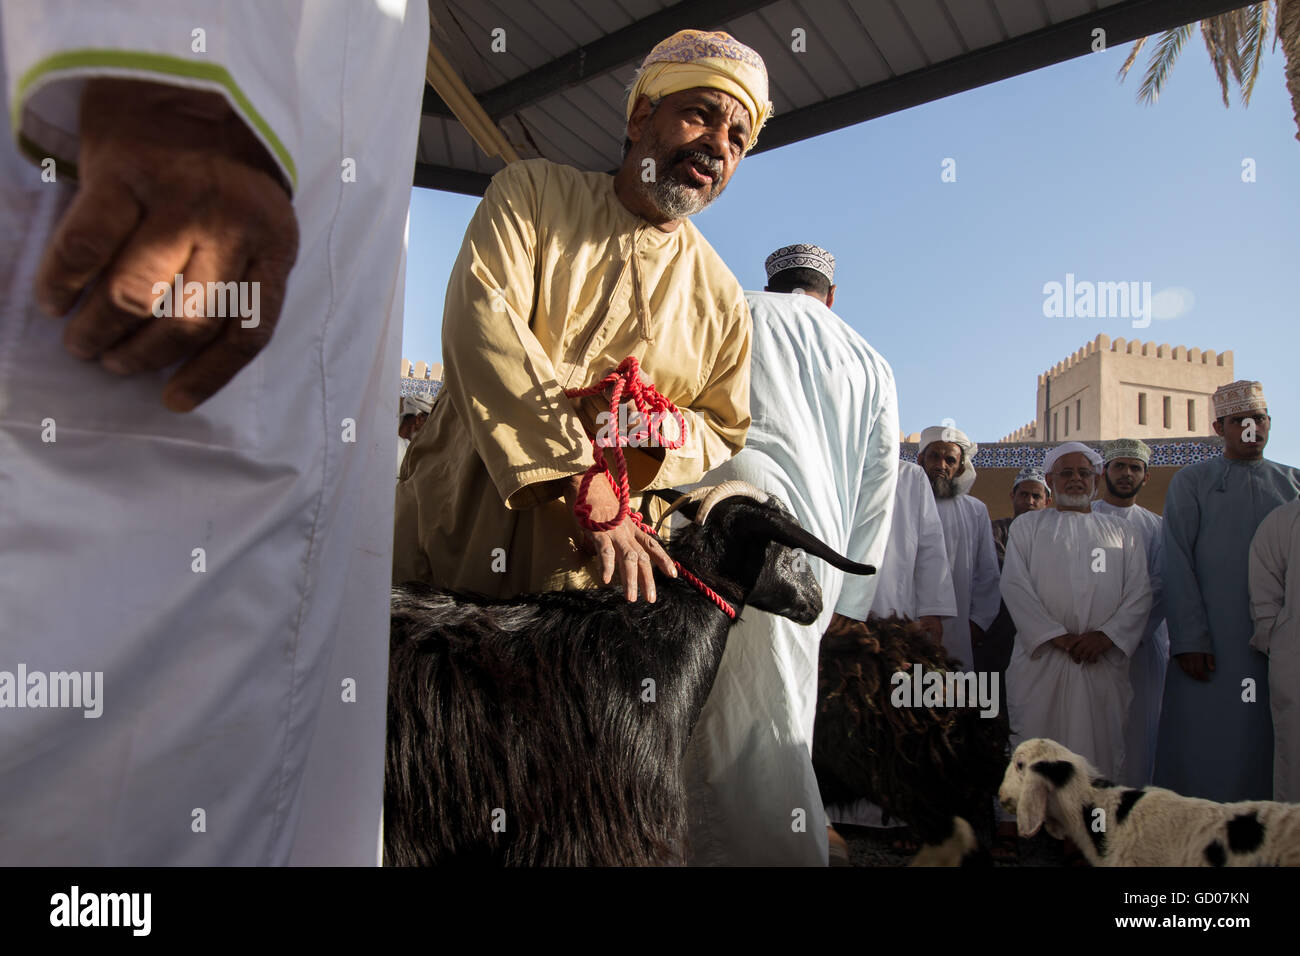 NIZWA, OMAN - 24 APRIL 2015:Omani Männer an der traditionelle Viehmarkt oder Souk in Nizwa, Oman. Stockfoto